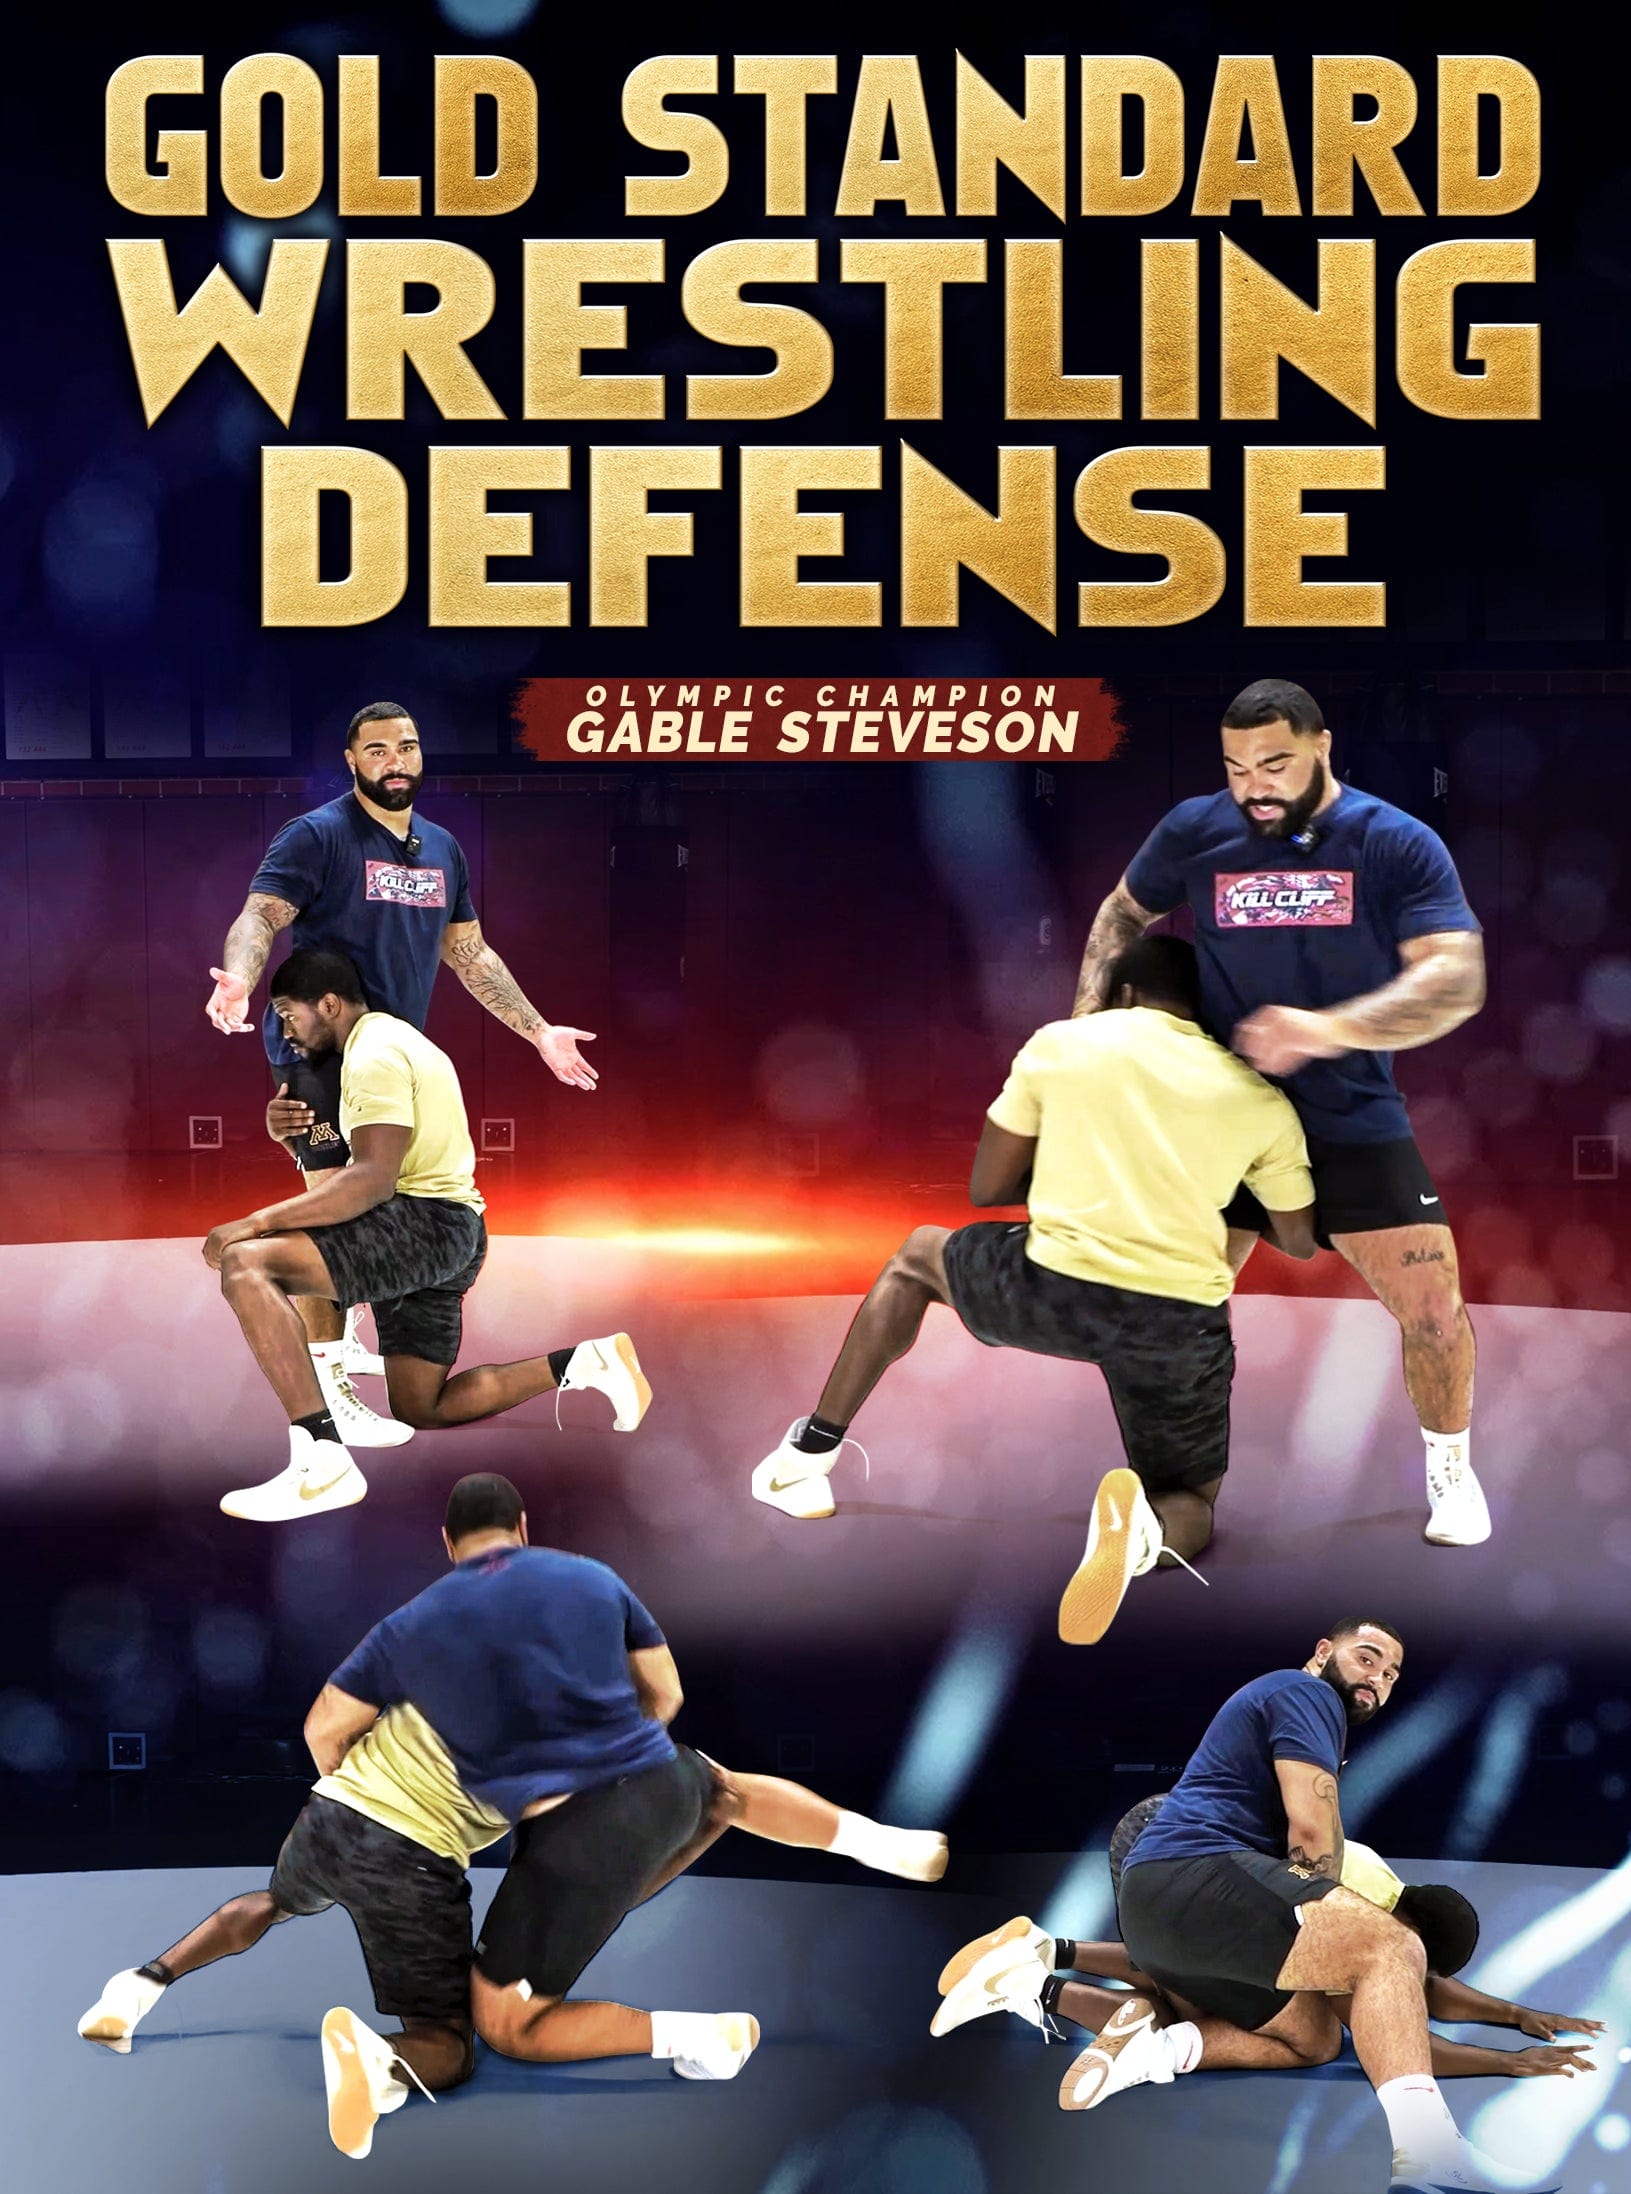 Gold Standard Wrestling Defense by Gable Steveson - Fanatic Wrestling